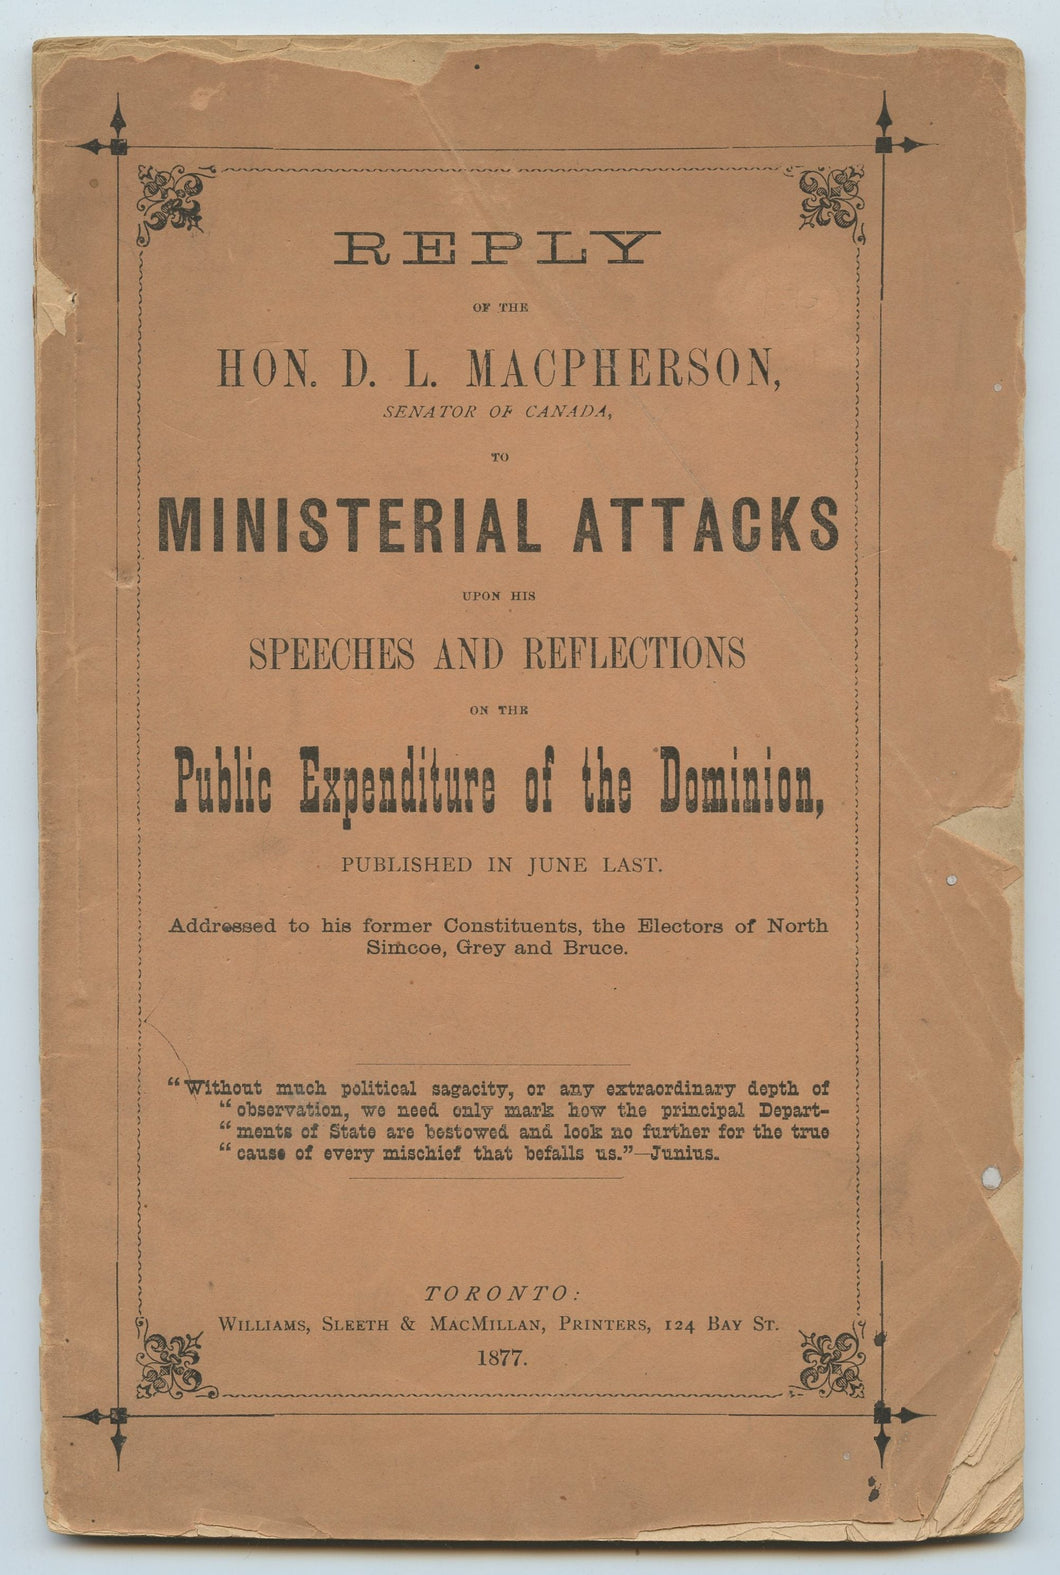 Reply of the Hon. D. L. Macpherson, Senator of Canada,